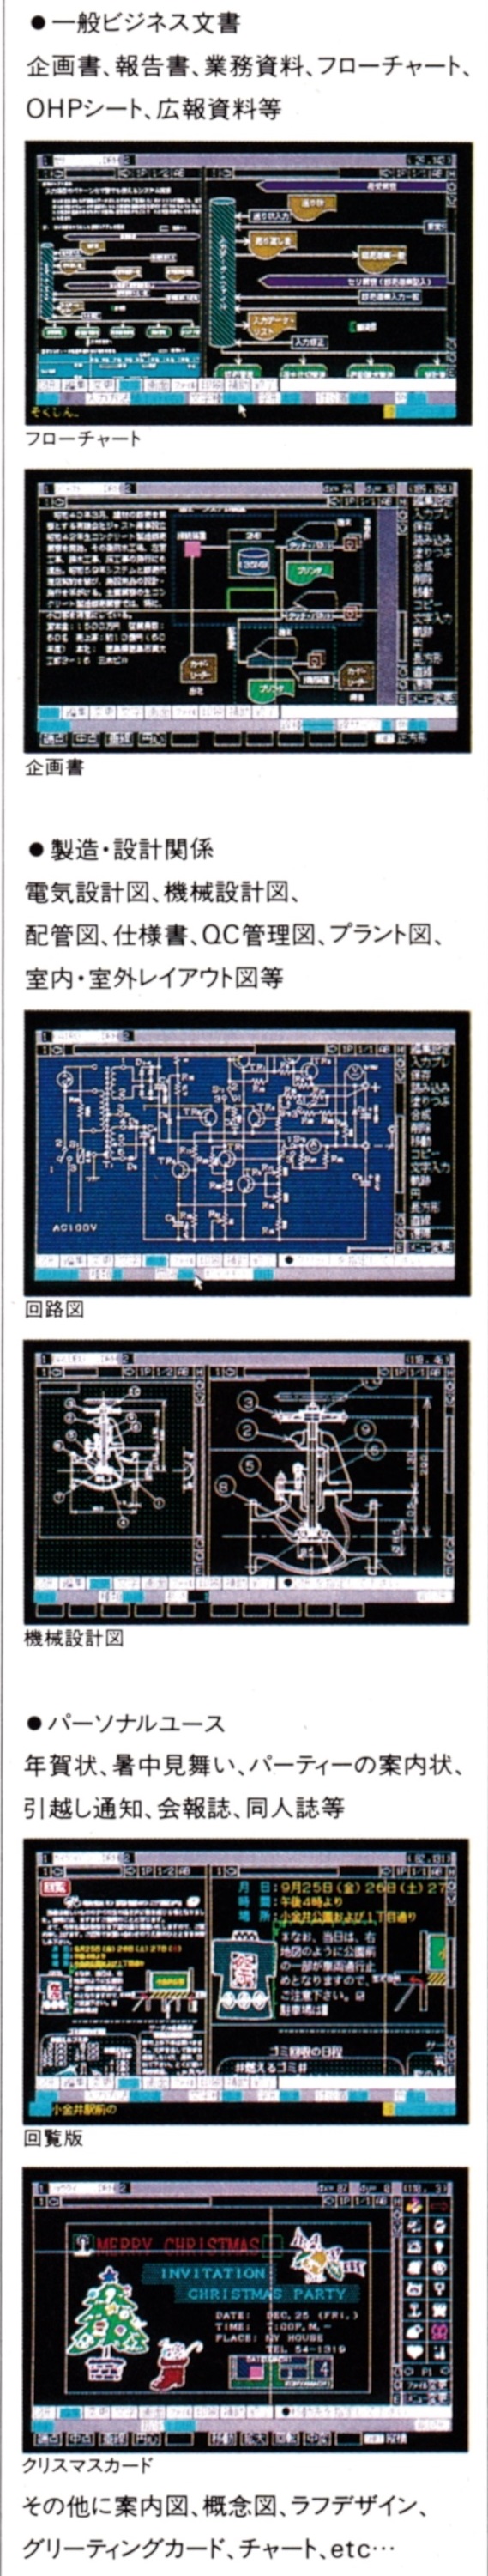 ASCII1987(04)a17花子説明08_W520.jpg